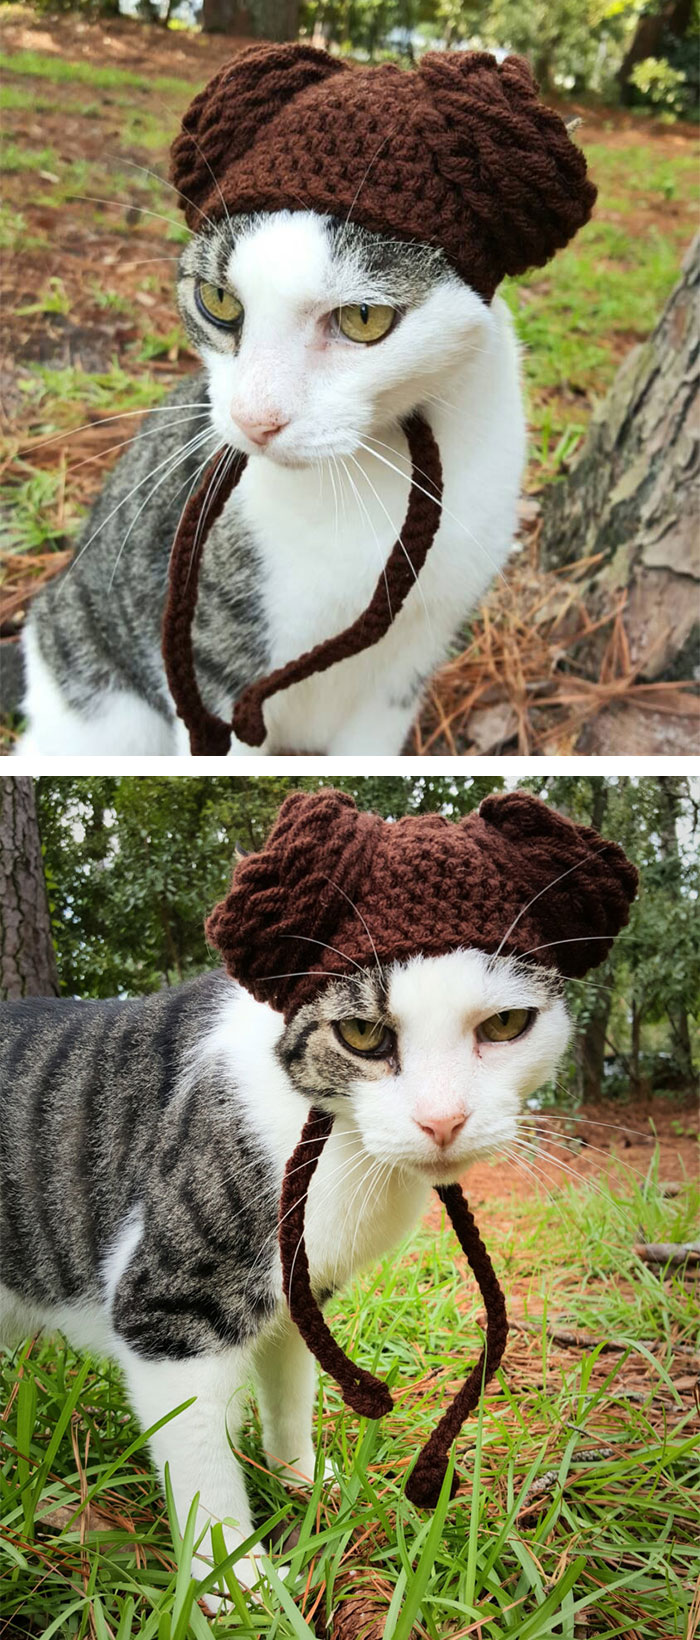 crochet-handmade-hats-pets-iheartneedlework-3__700.jpg